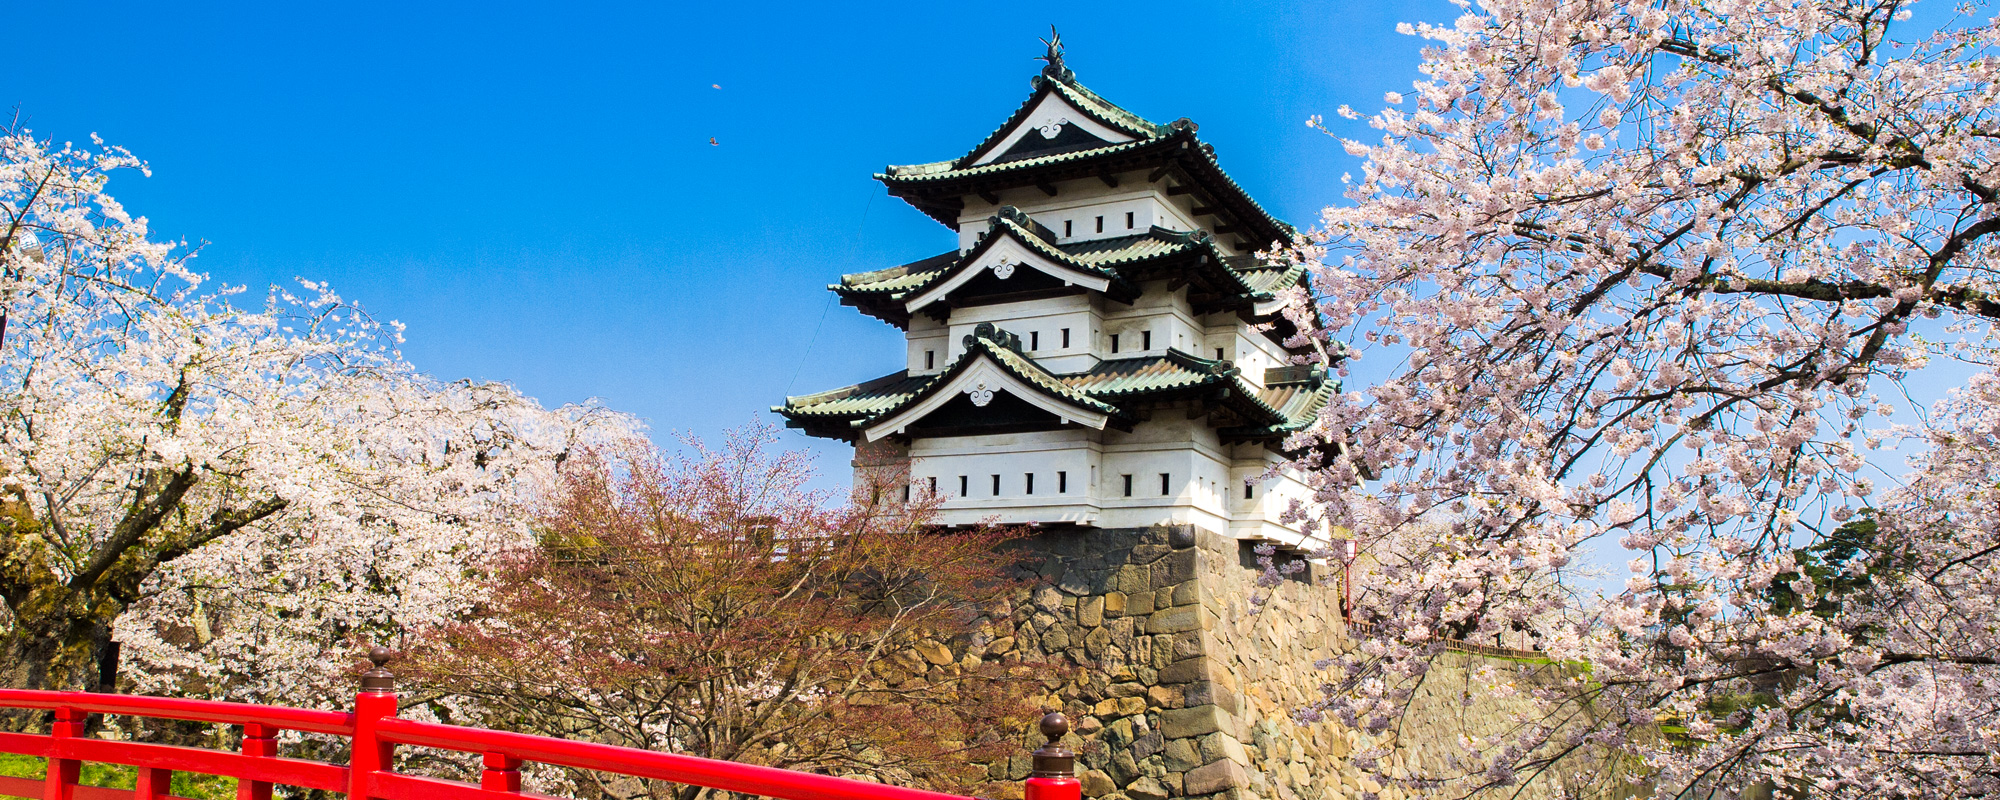 Cherry blossoms and hirosaki castle